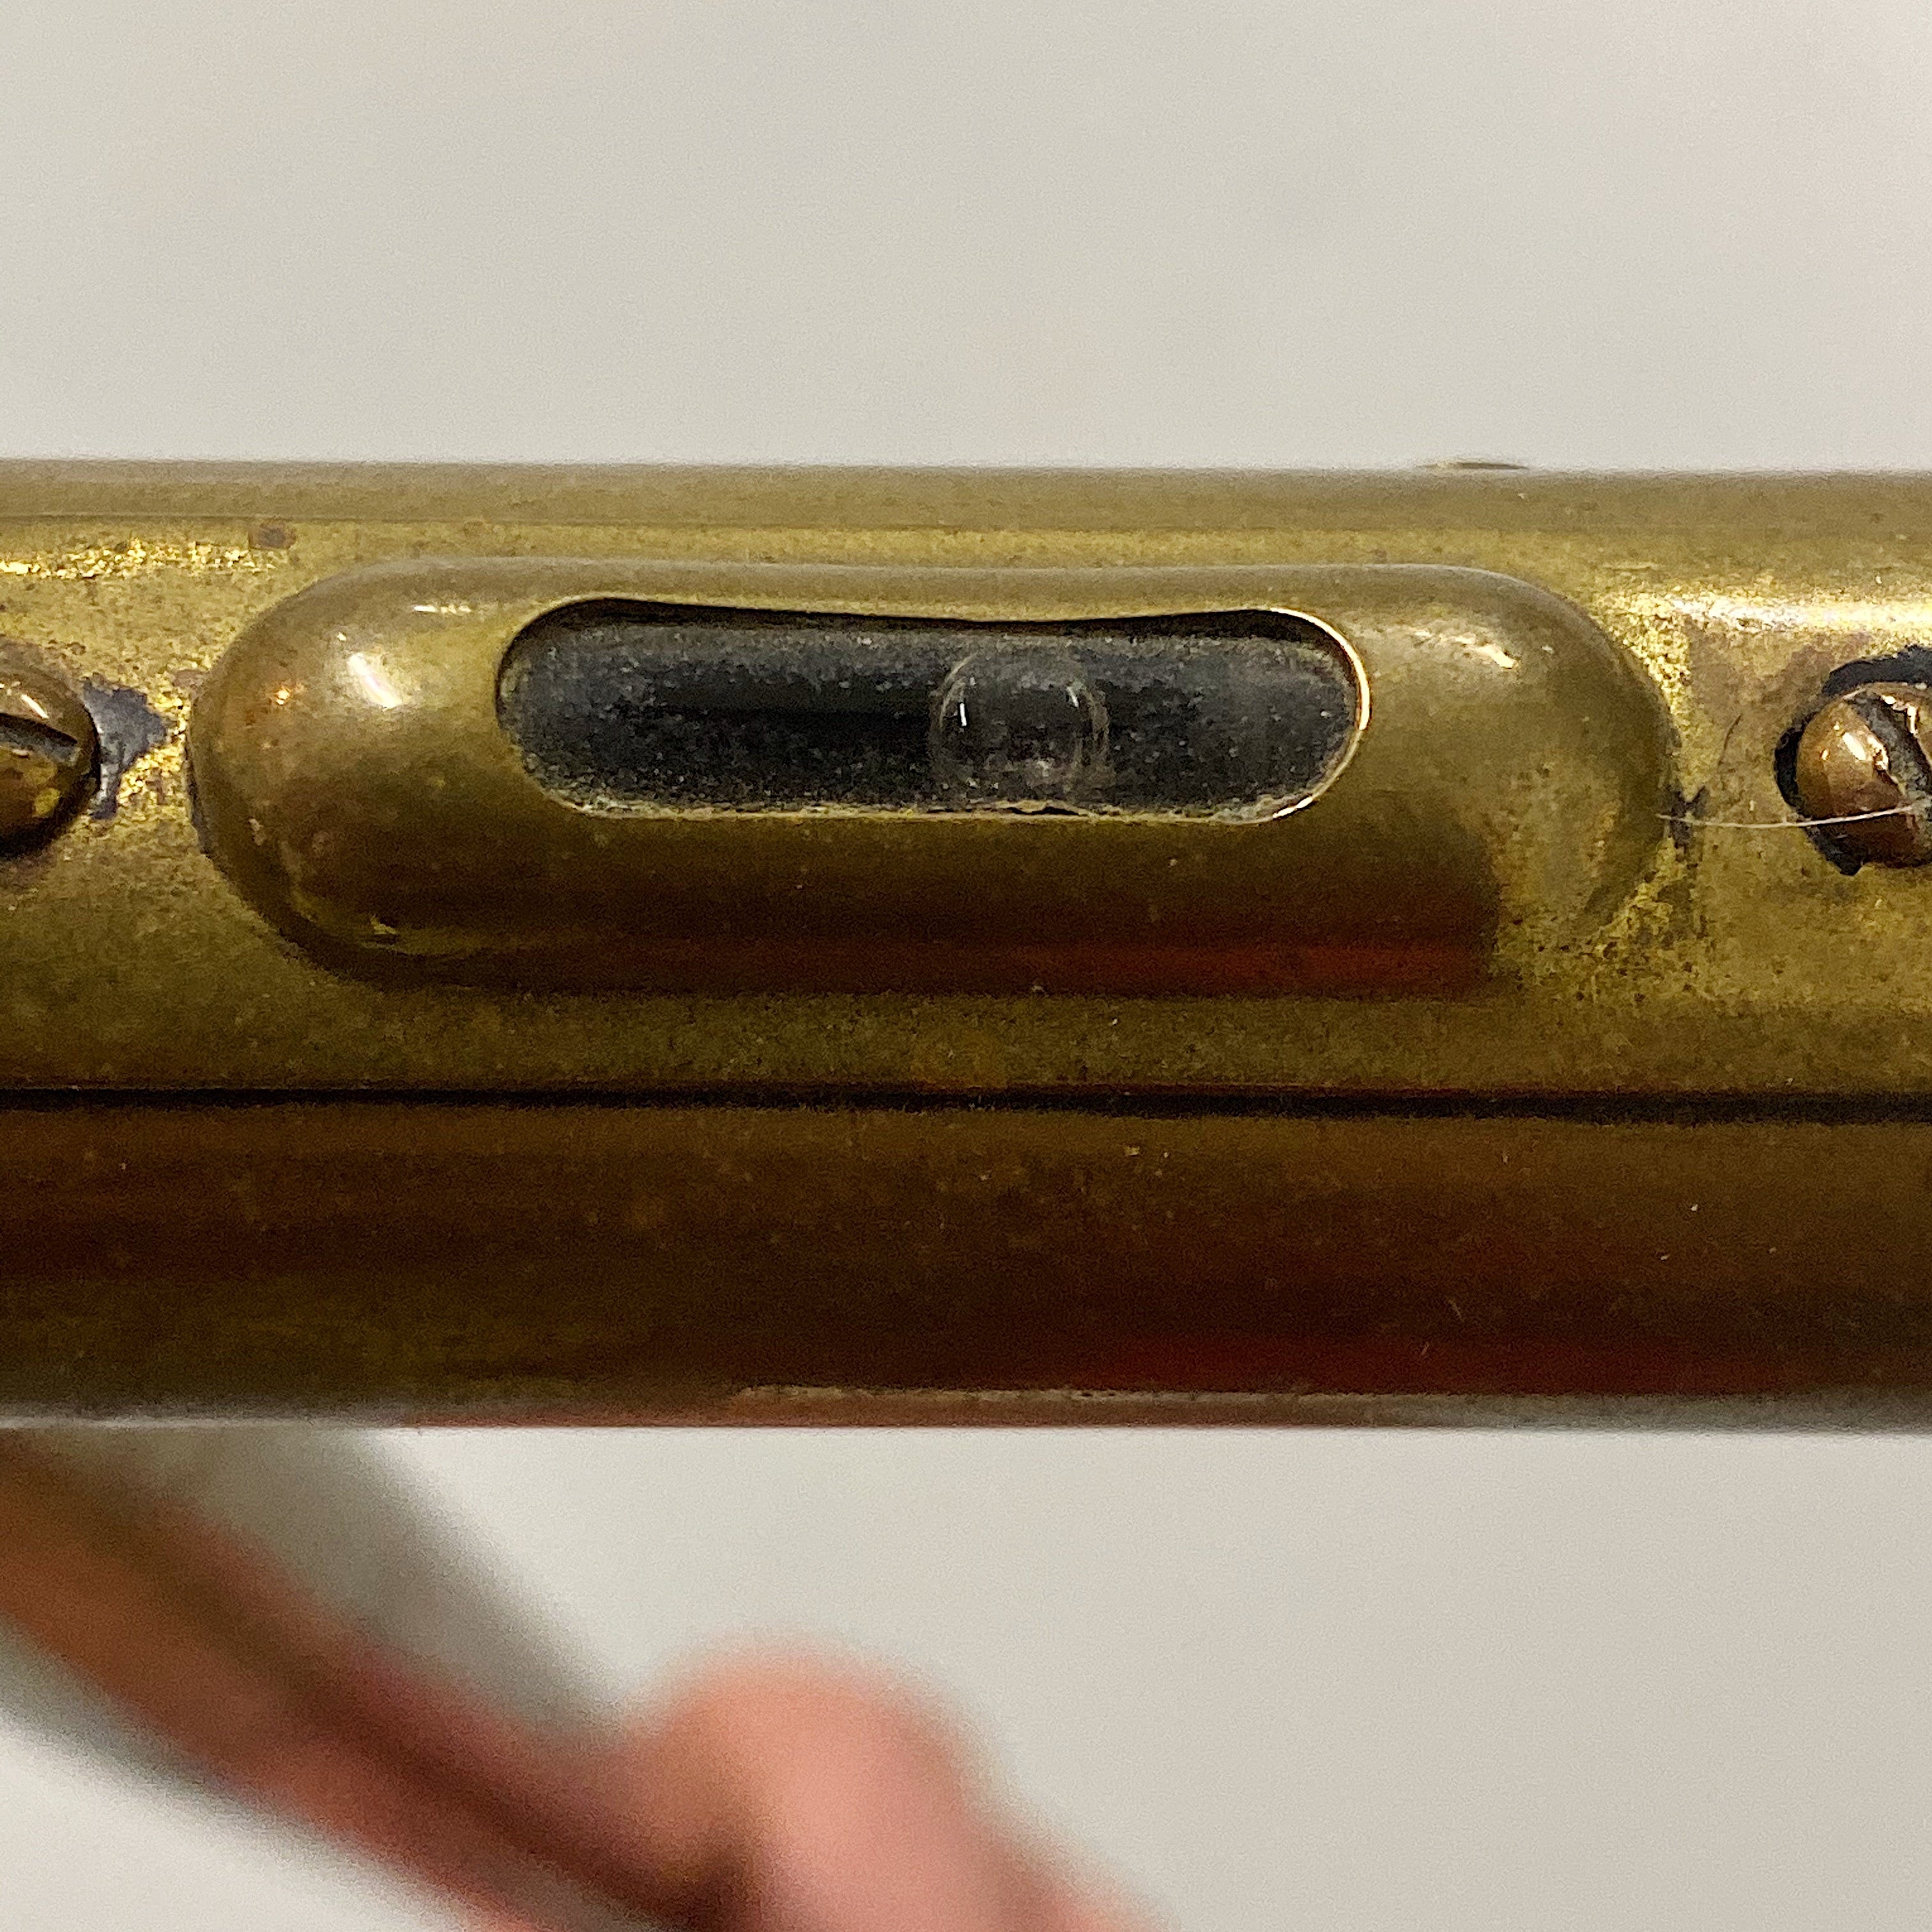 Survey Level on Antique Dietzgen Survey Gadget Cane - Early 1900s - Level System Cane - Rare Brass Walking Stick - Vintage Architectural Collectible